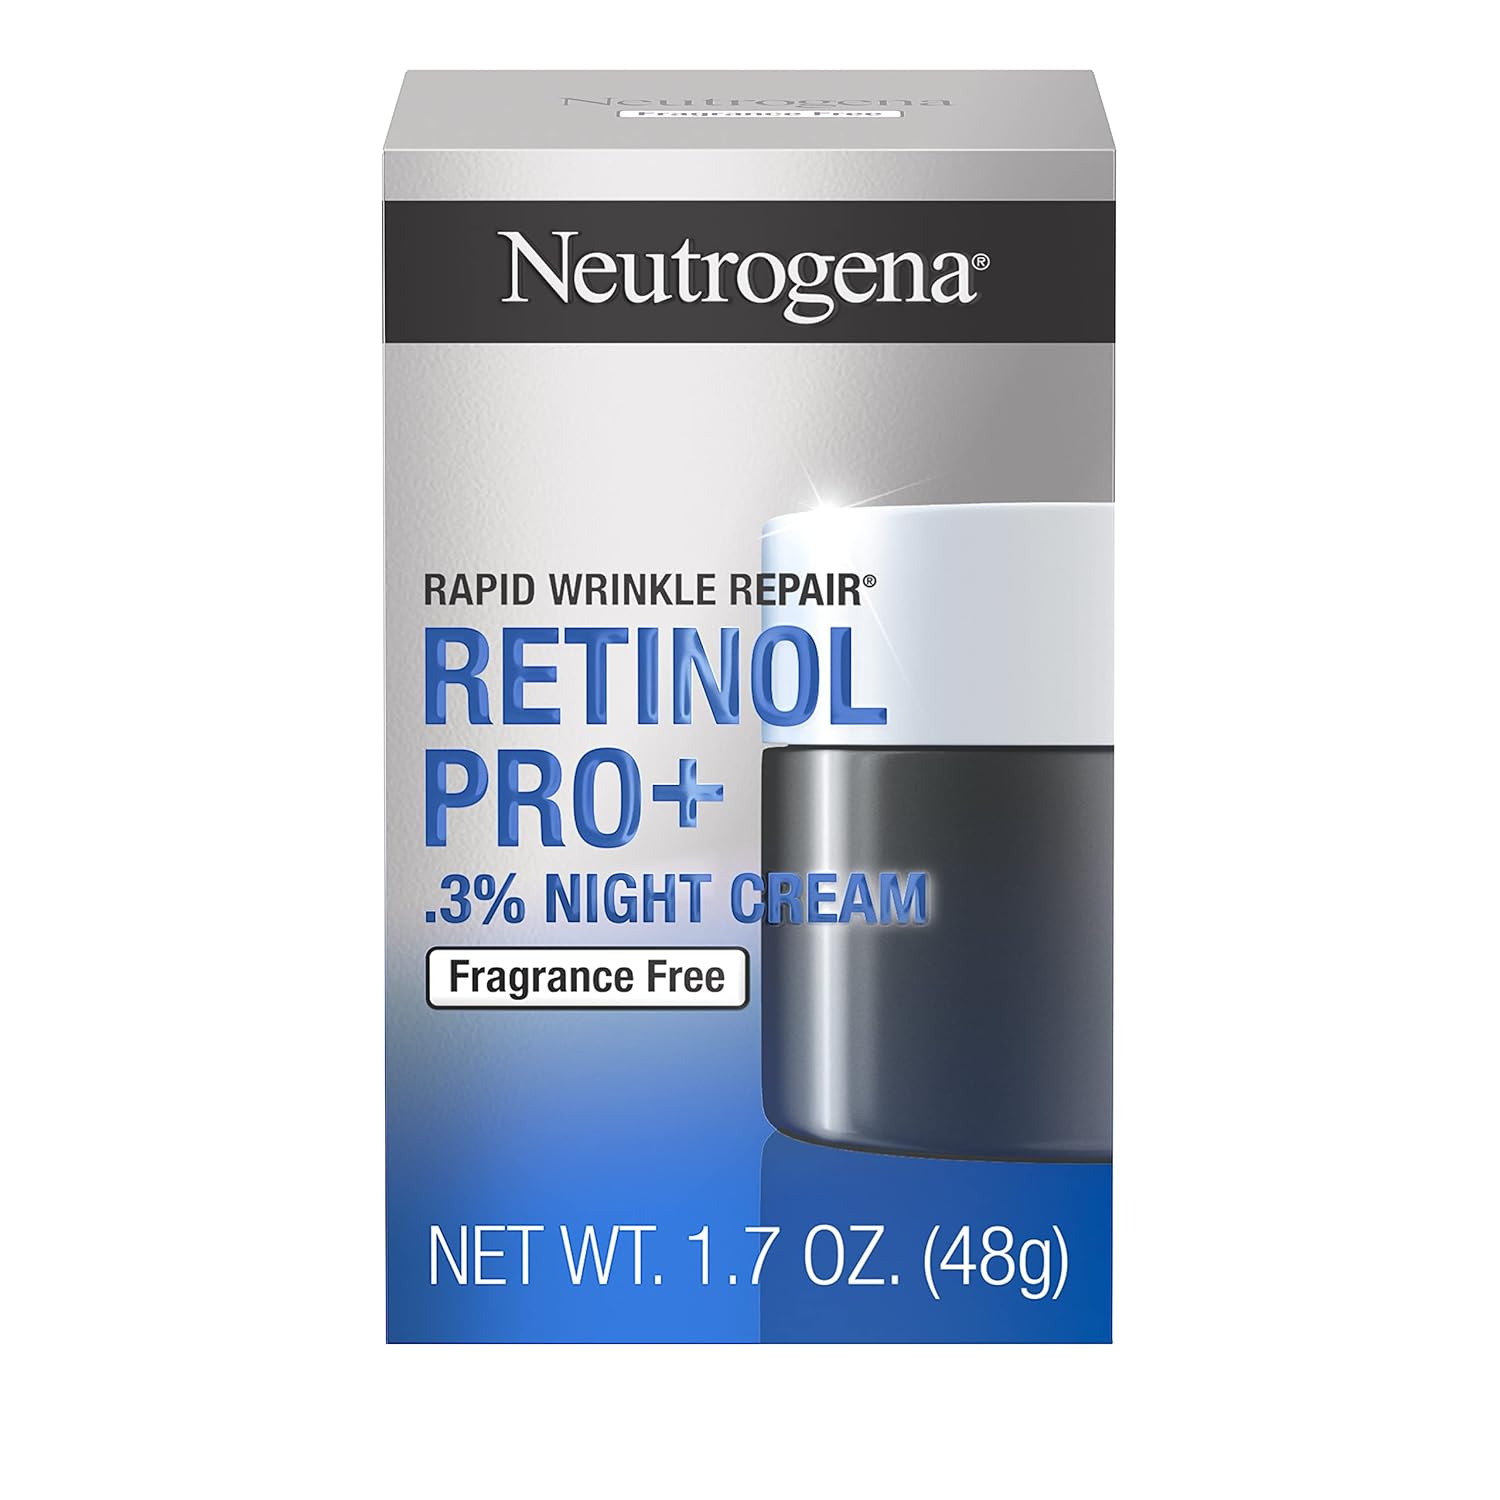 Neutrogena Rapid Wrinkle Repair Retinol Pro+ Anti-Wrink